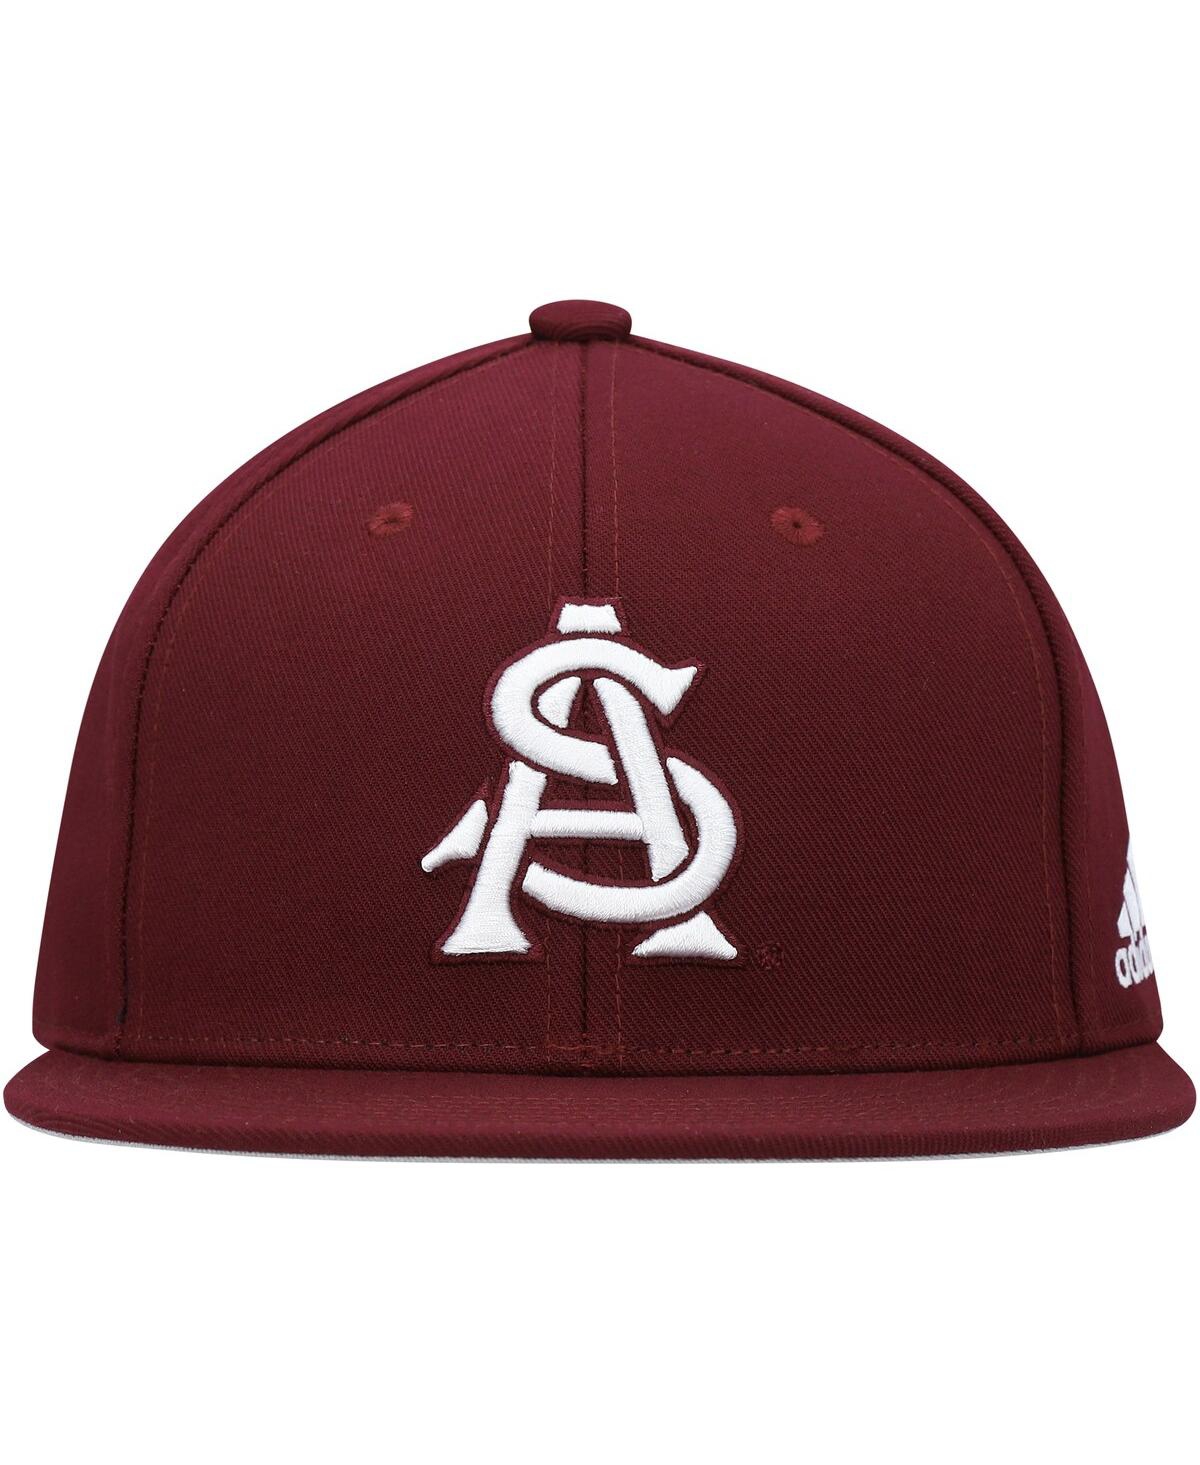 Shop Adidas Originals Men's Adidas Maroon Arizona State Sun Devils Baseball On-field Fitted Hat